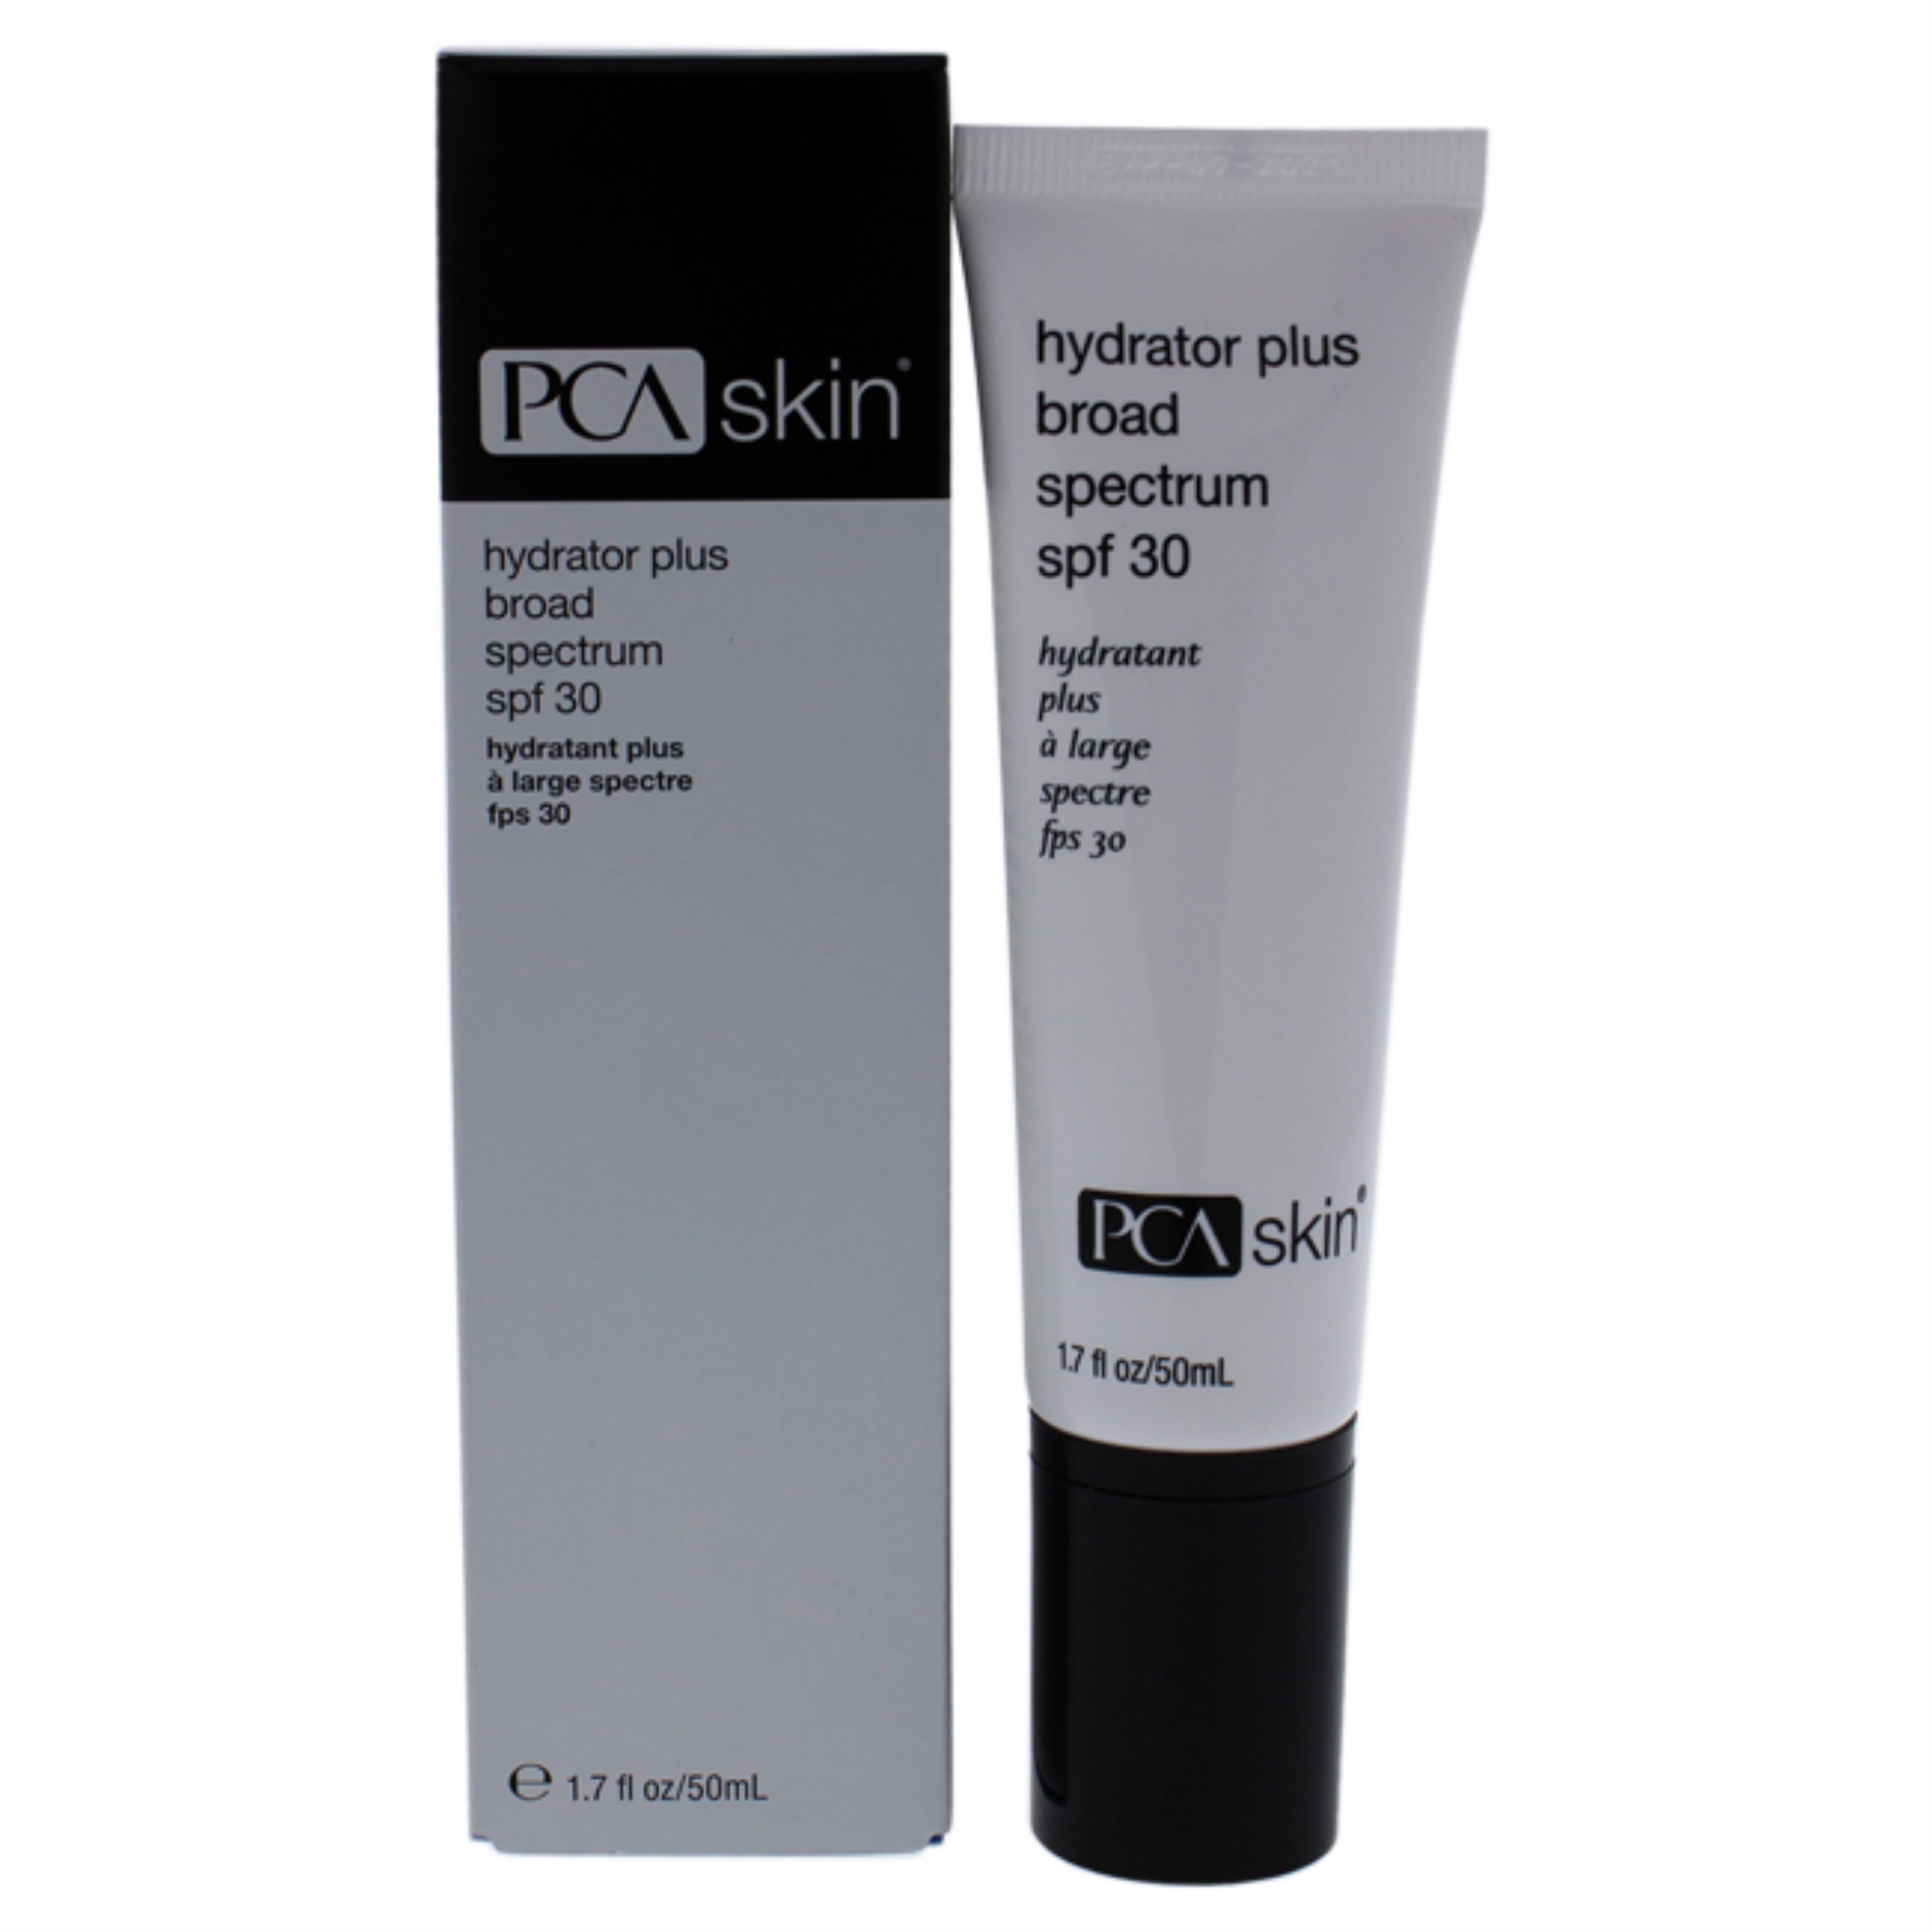 PCA Skin Hydrator Plus Broad Spectrum SPF 30 by PCA Skin for Unisex - 1.7 oz Sunscreen